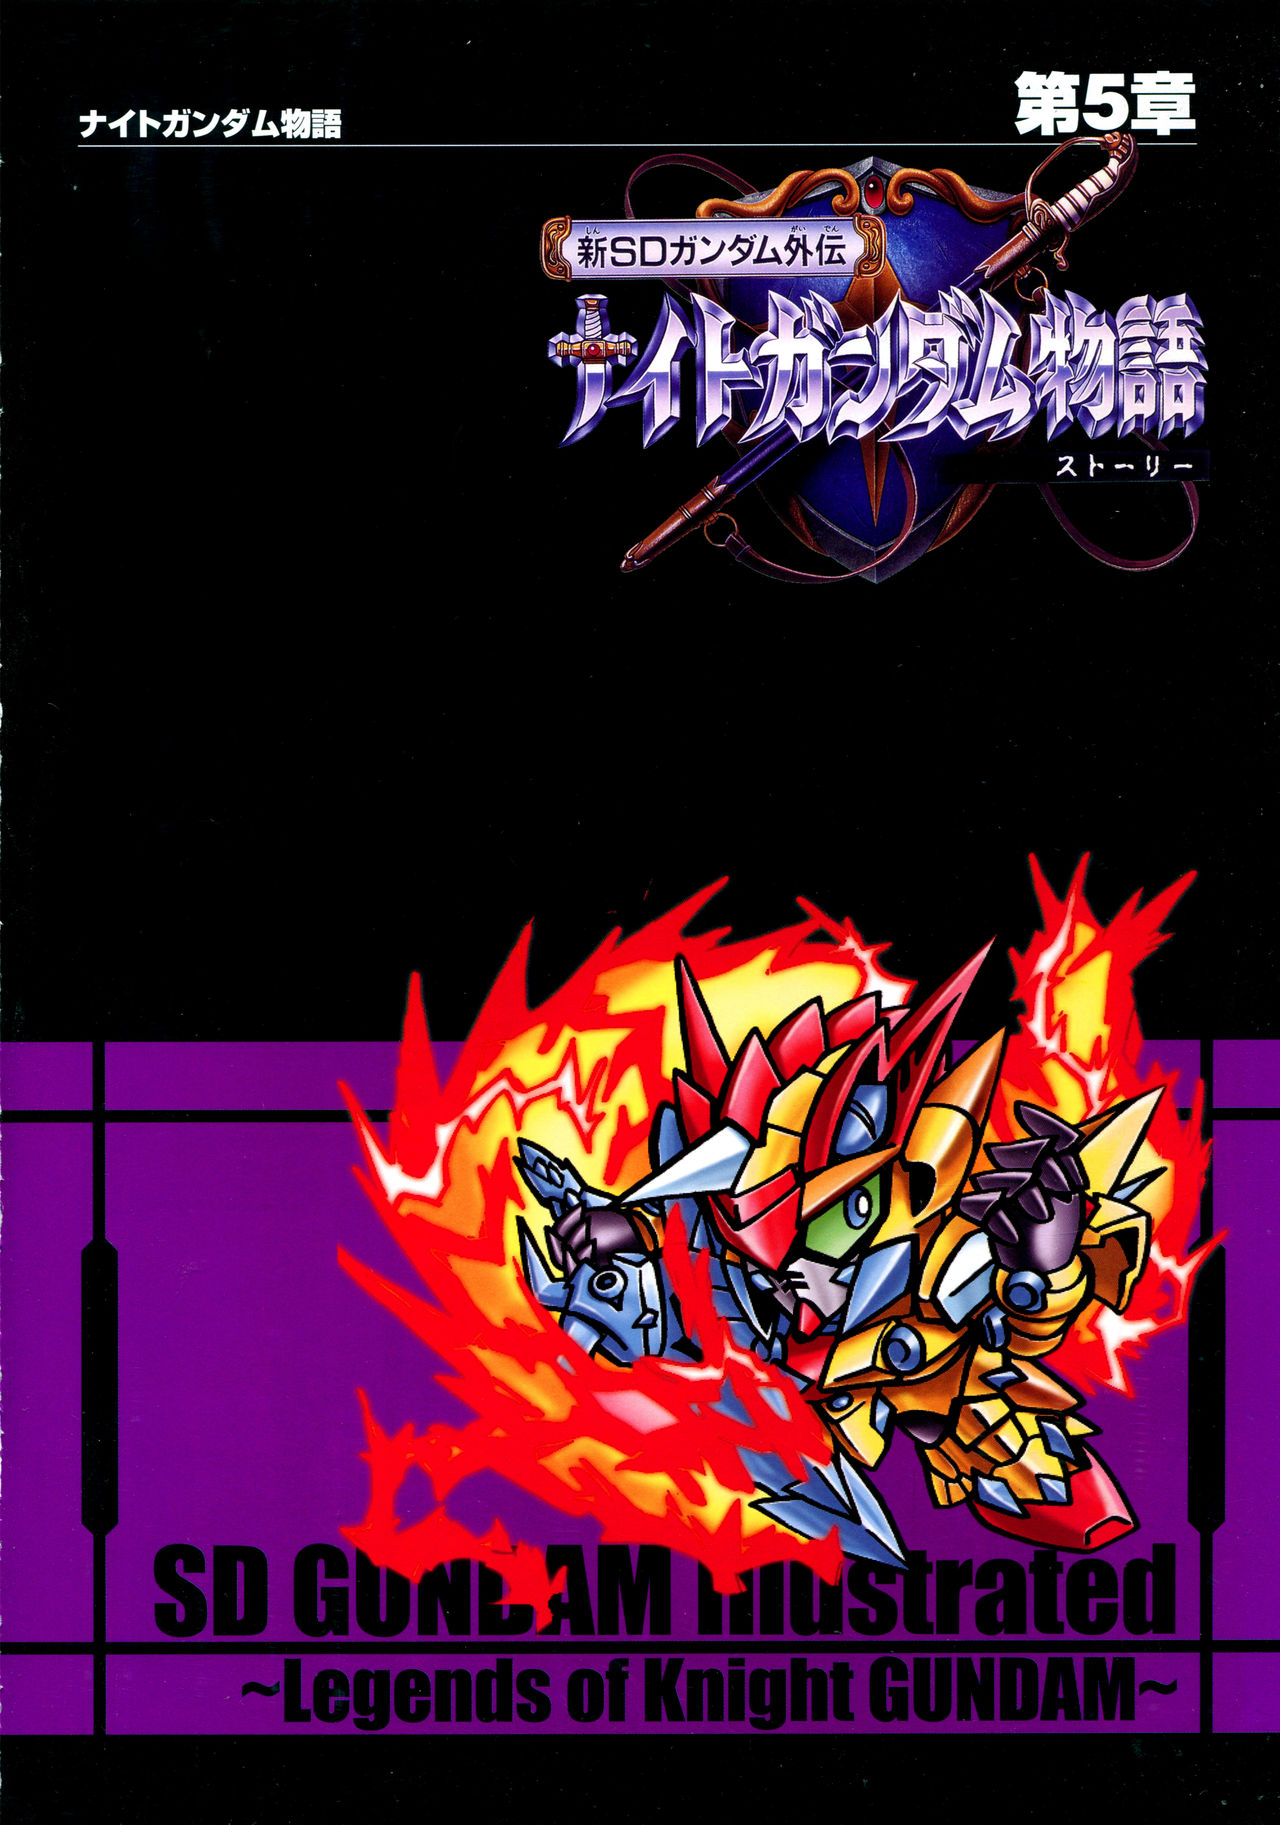 Shin SD Gundam Gaiden: Knight Gundam Monogatari | The Gundam Wiki